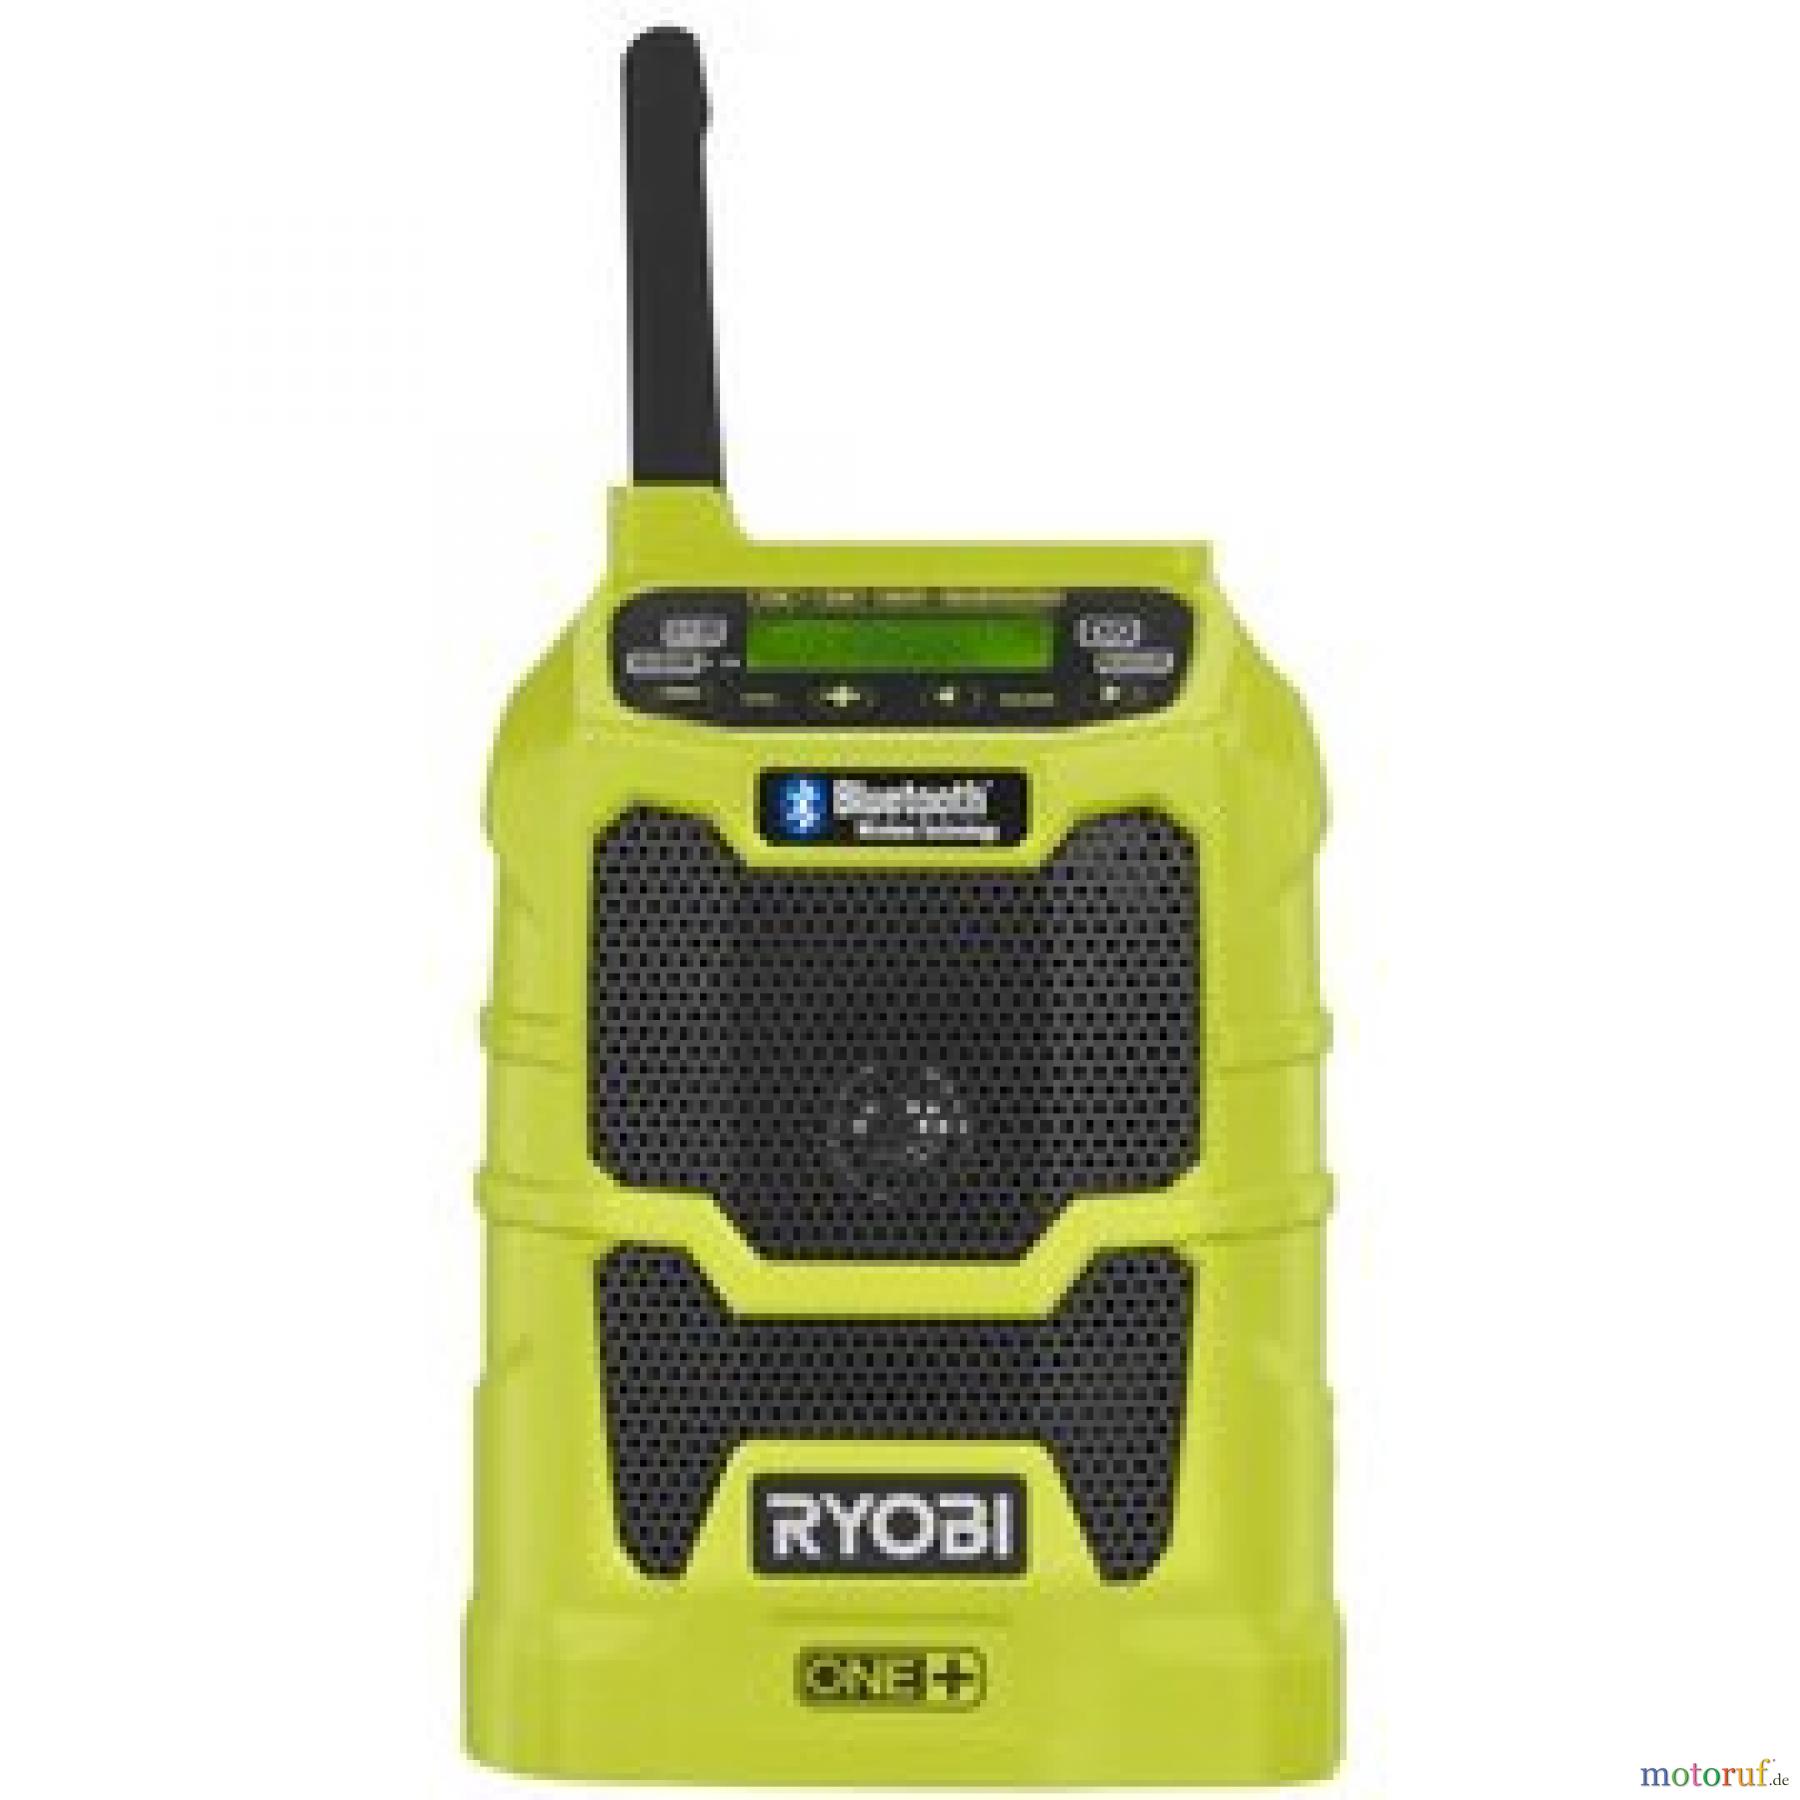  Ryobi Sonstige Geräte R18R Radio